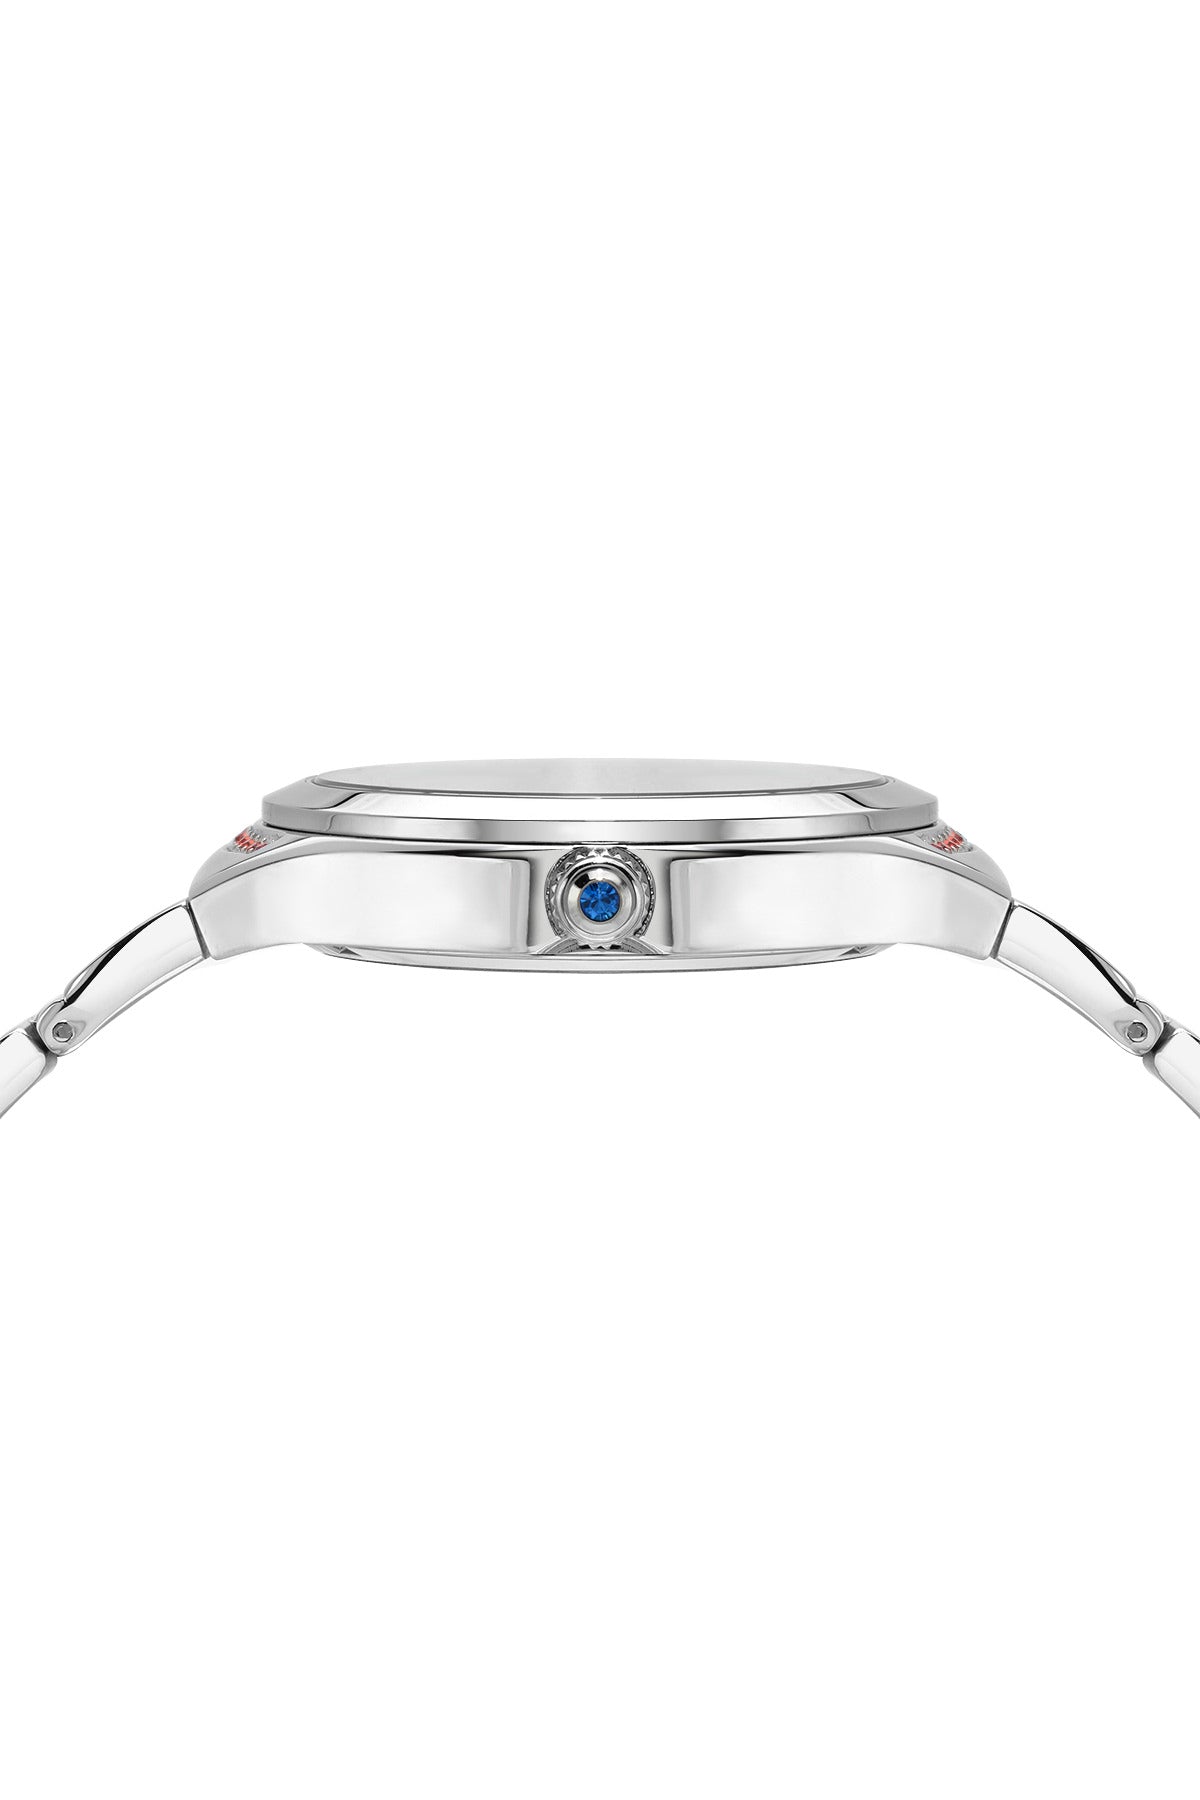 Porsmao Bleu Carmen luxury women's stainless steel watch, silver, red 991BCAS